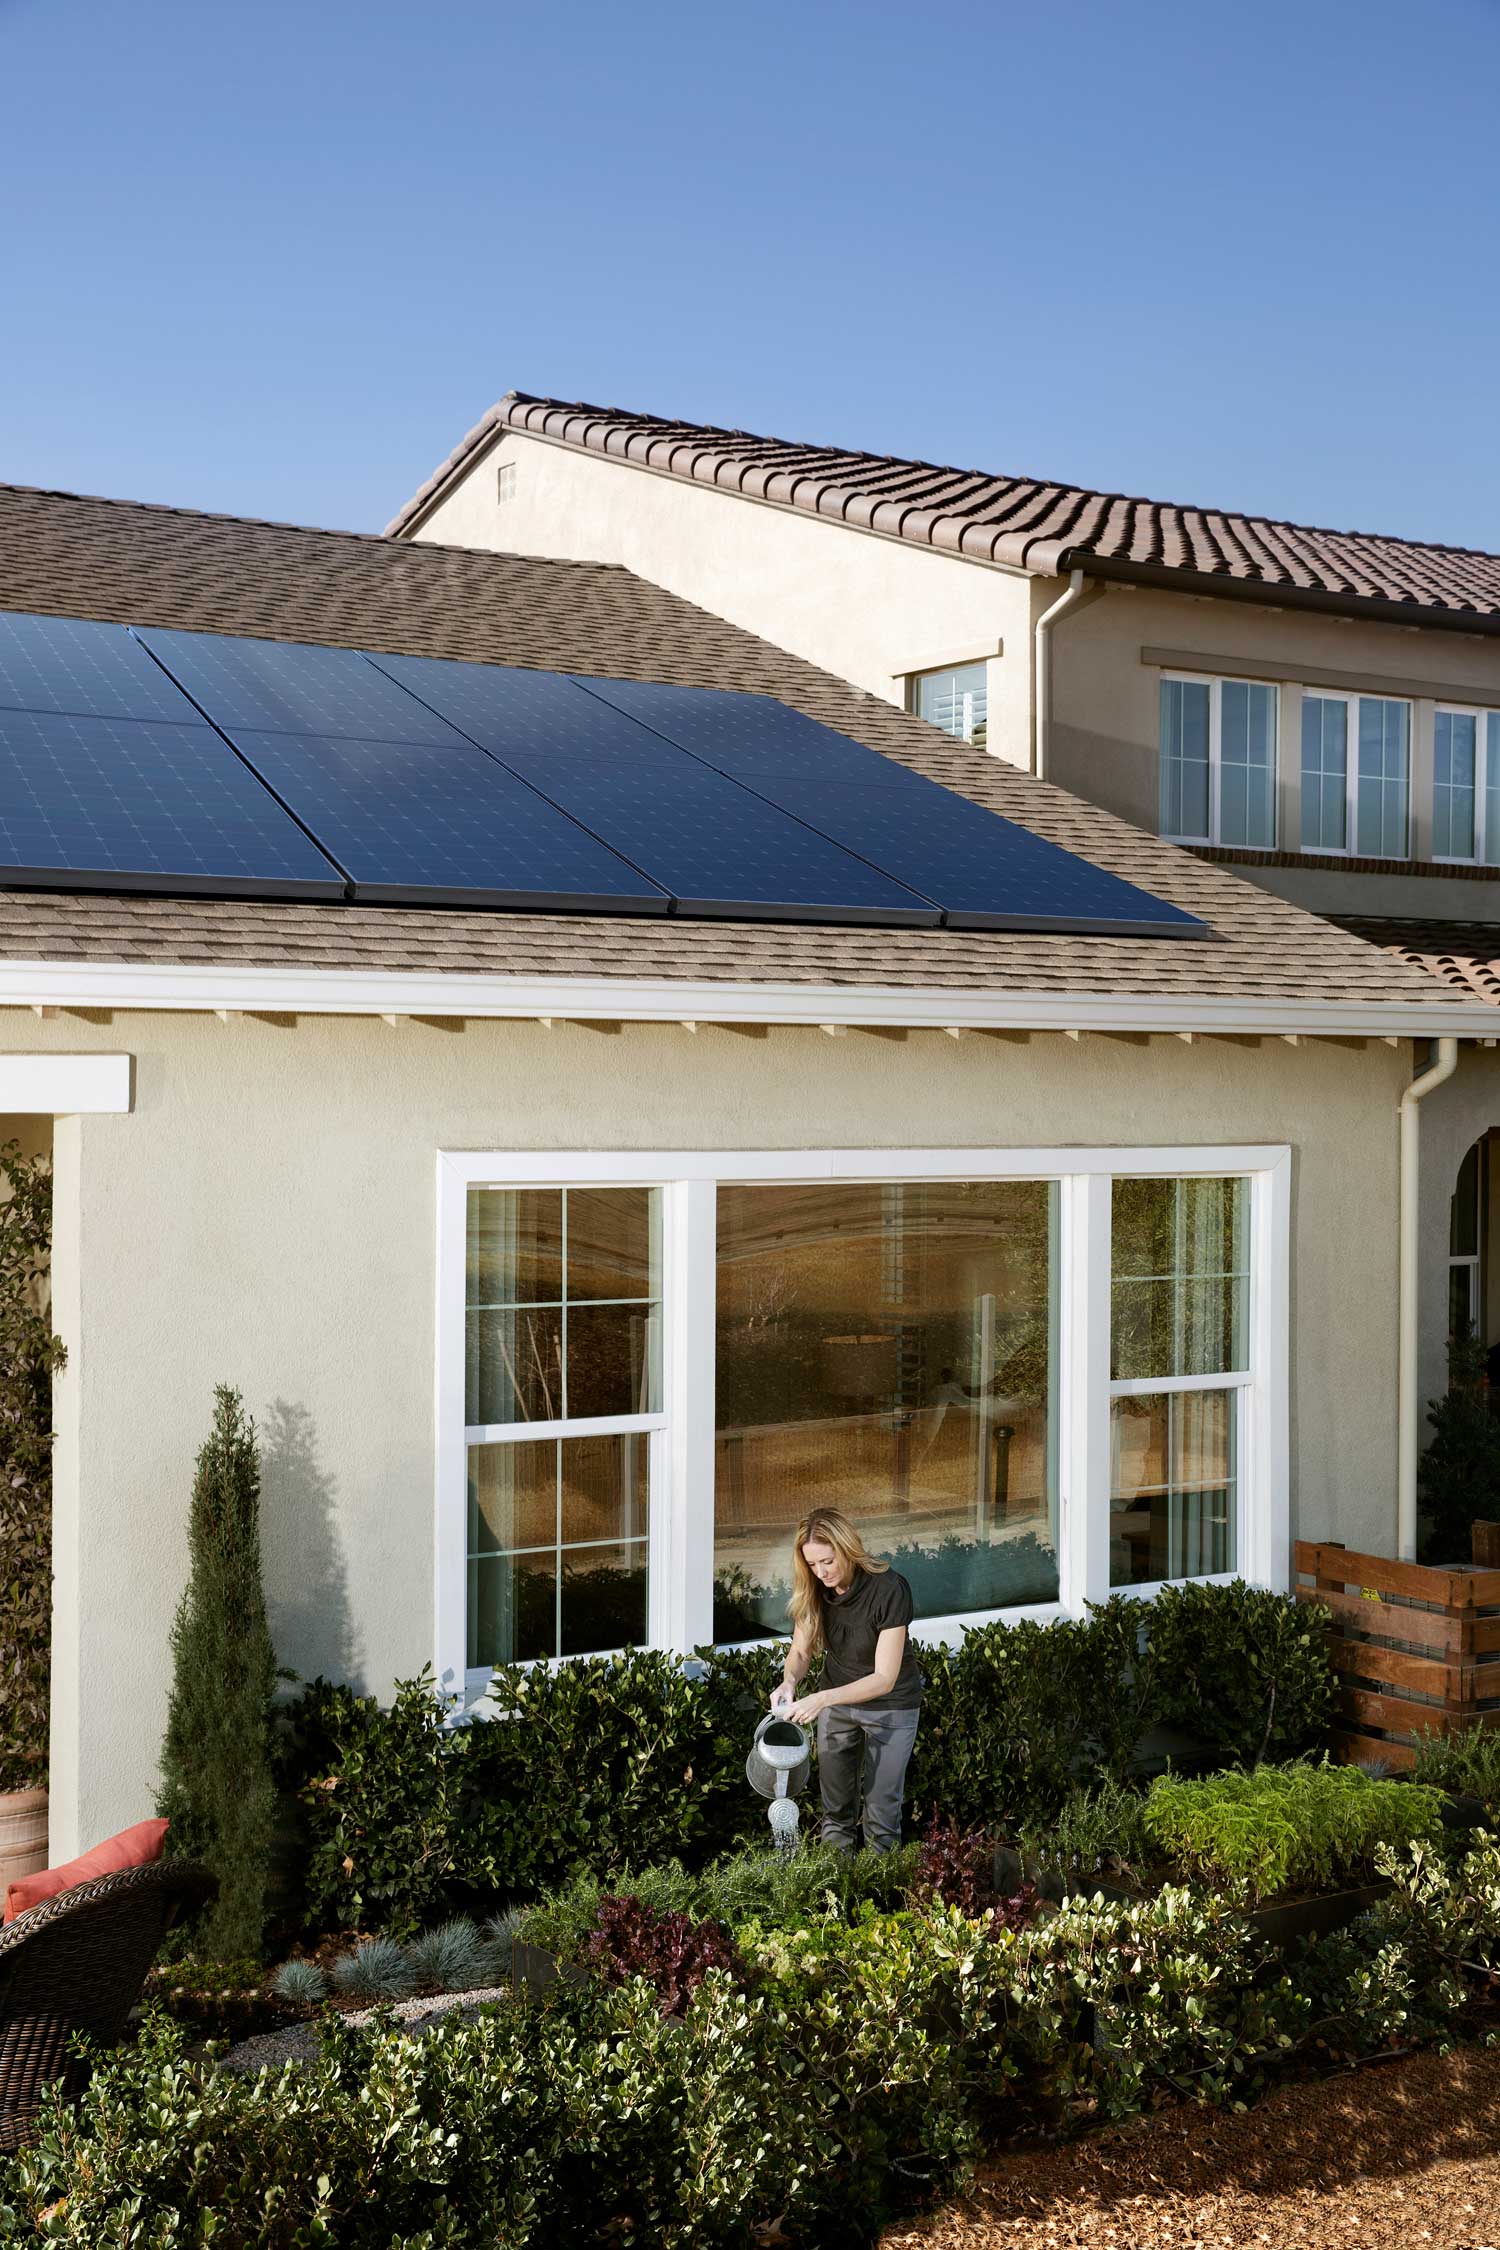 SunPower by Custom Energy is the best company for solar savings in Park City.